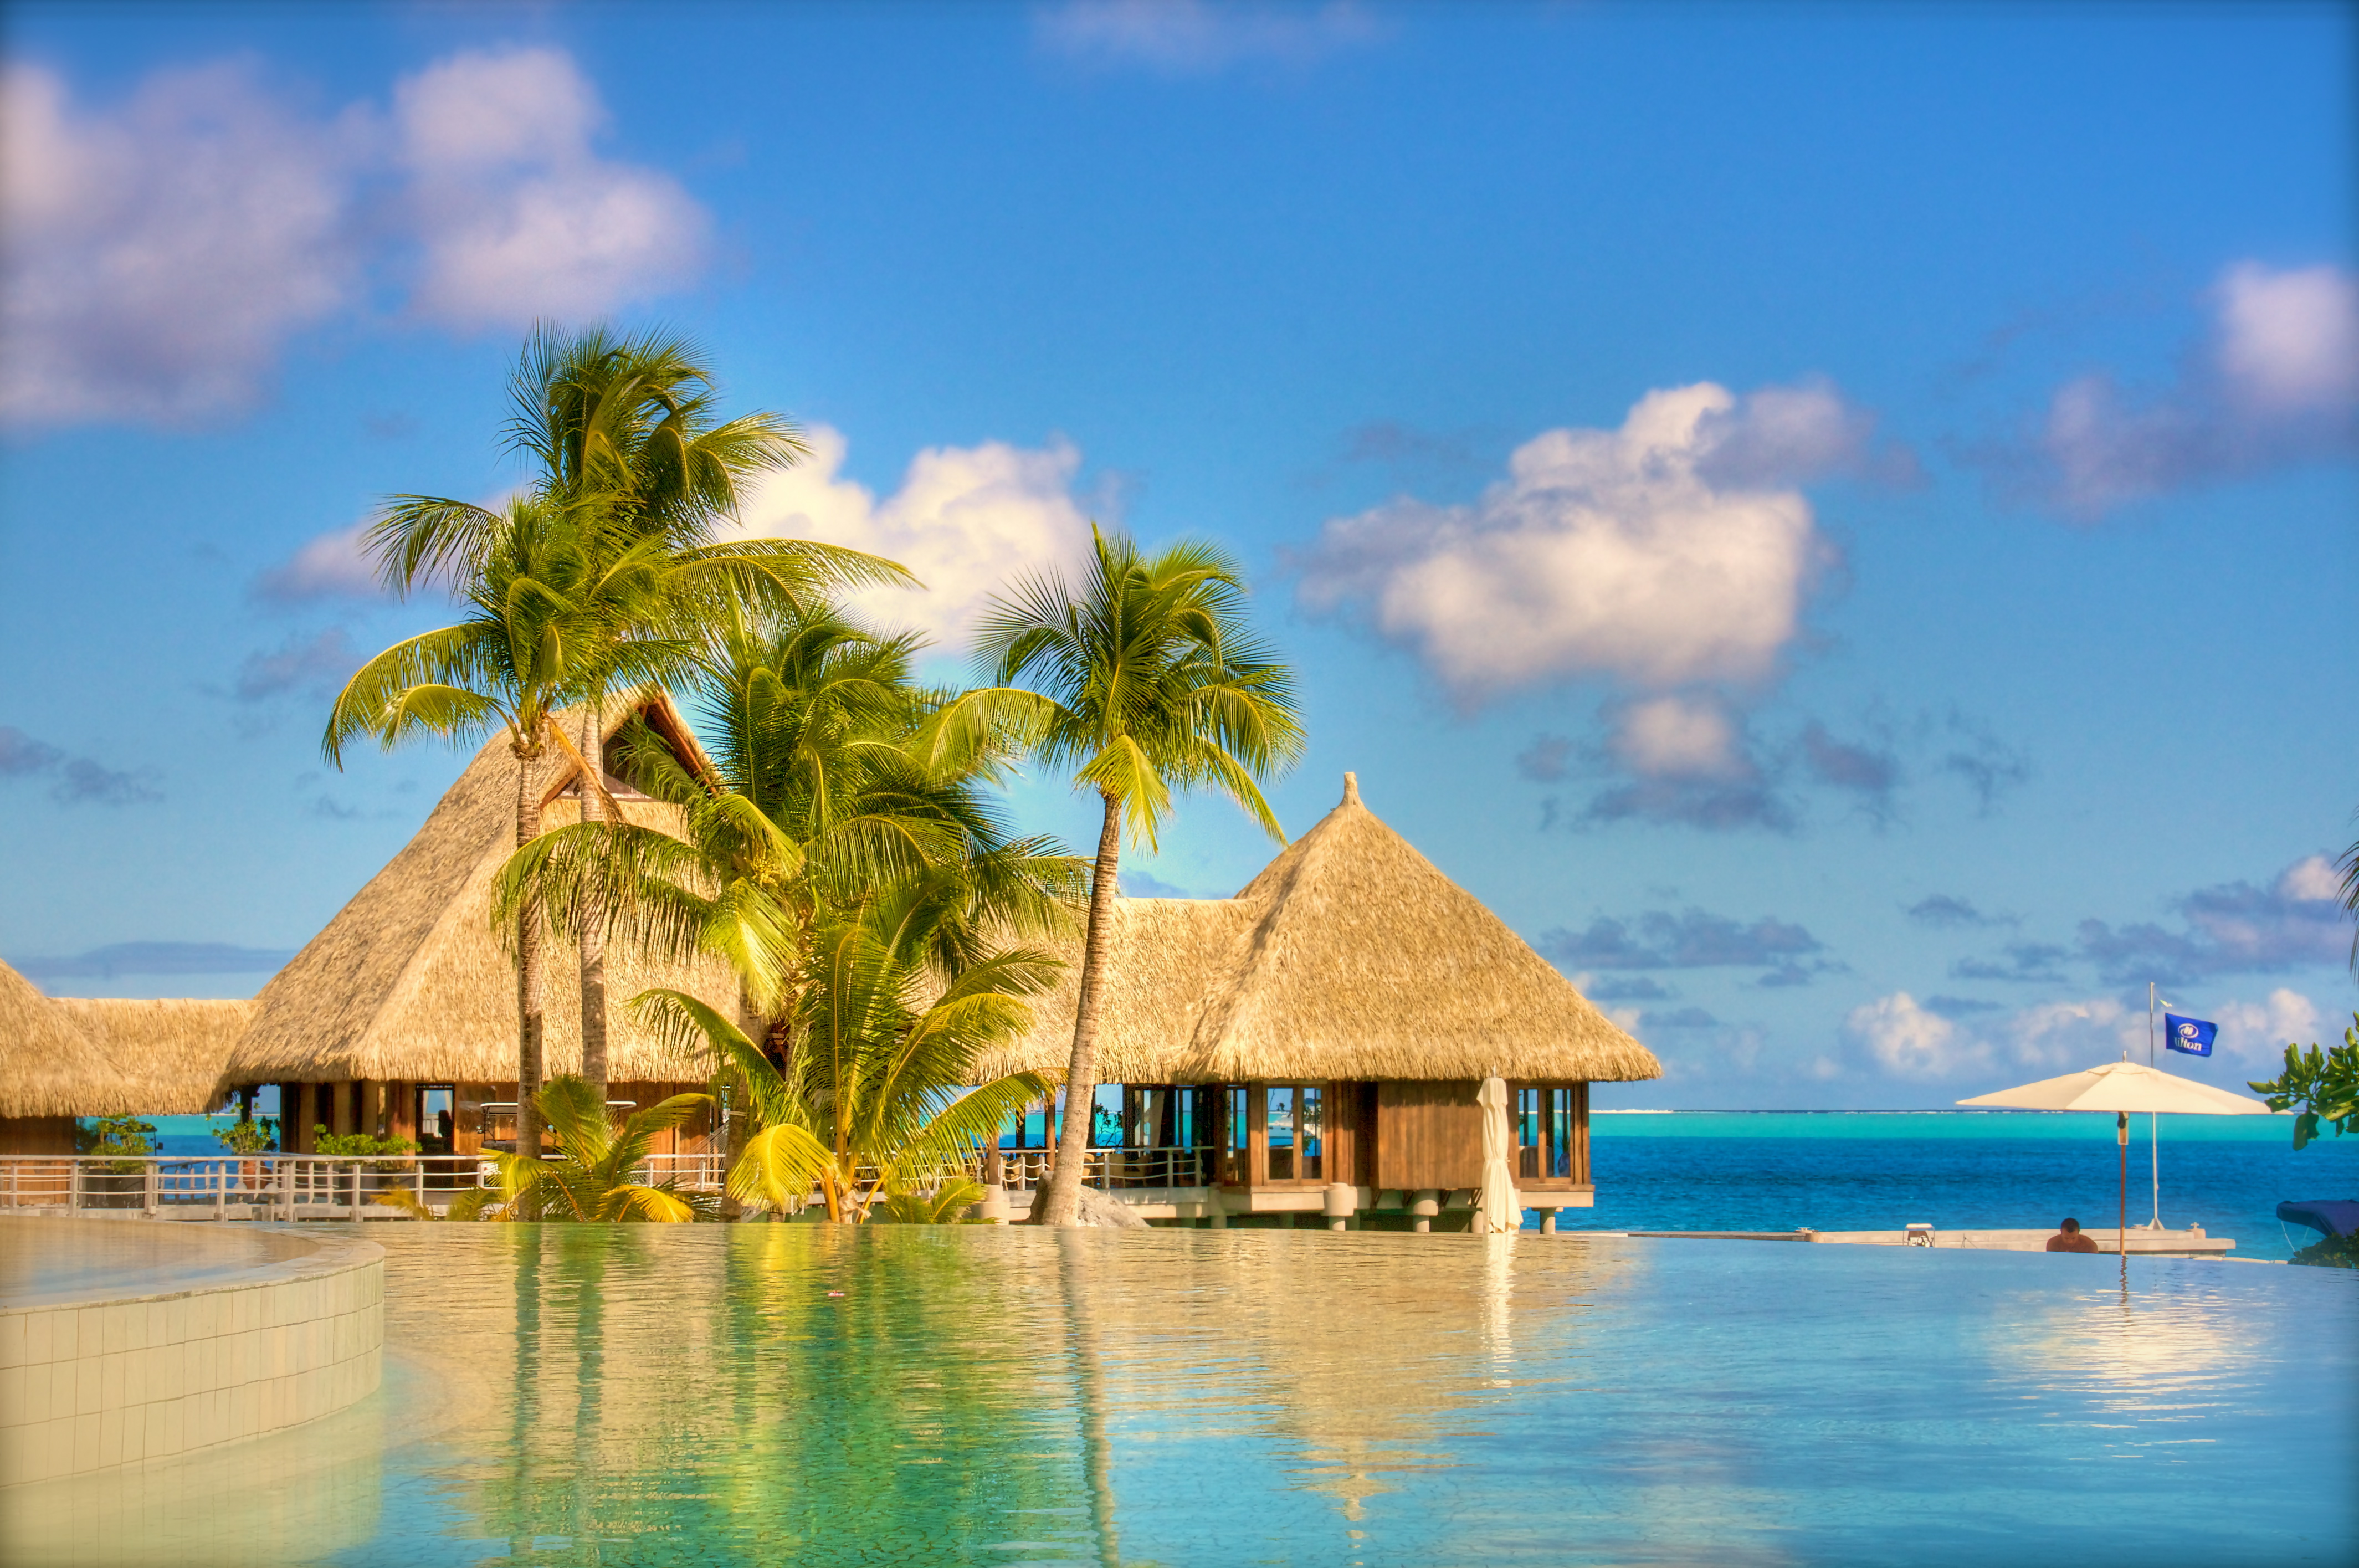 bungalow, resort, palm tree, man made, beach, tropical phone wallpaper